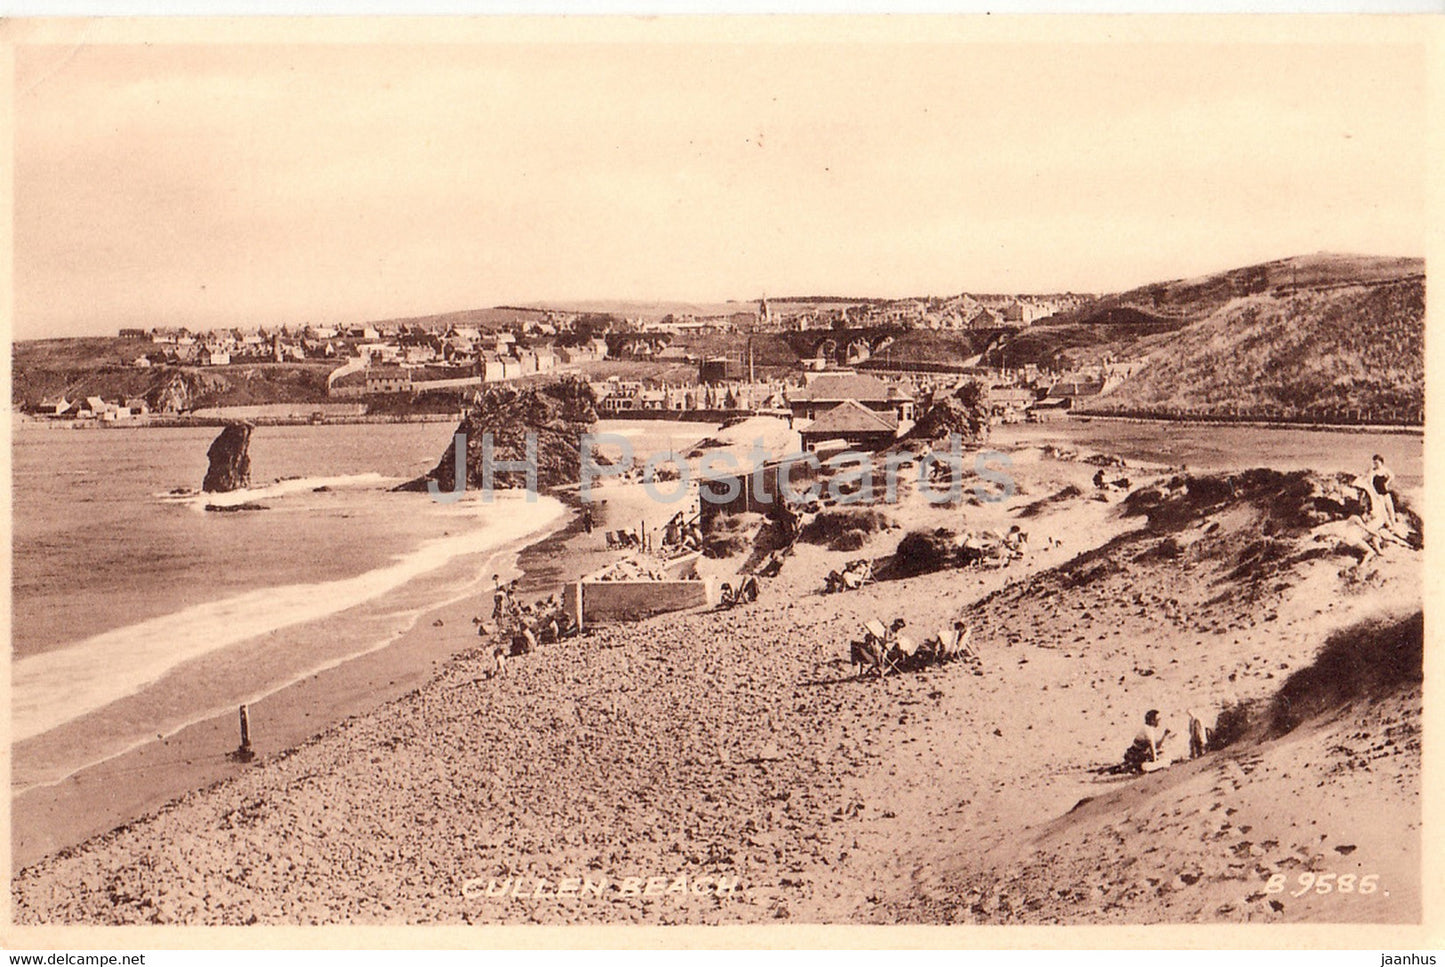 Cullen Beach - 9585 - old postcard - Scotland - United Kingdom - unused - JH Postcards